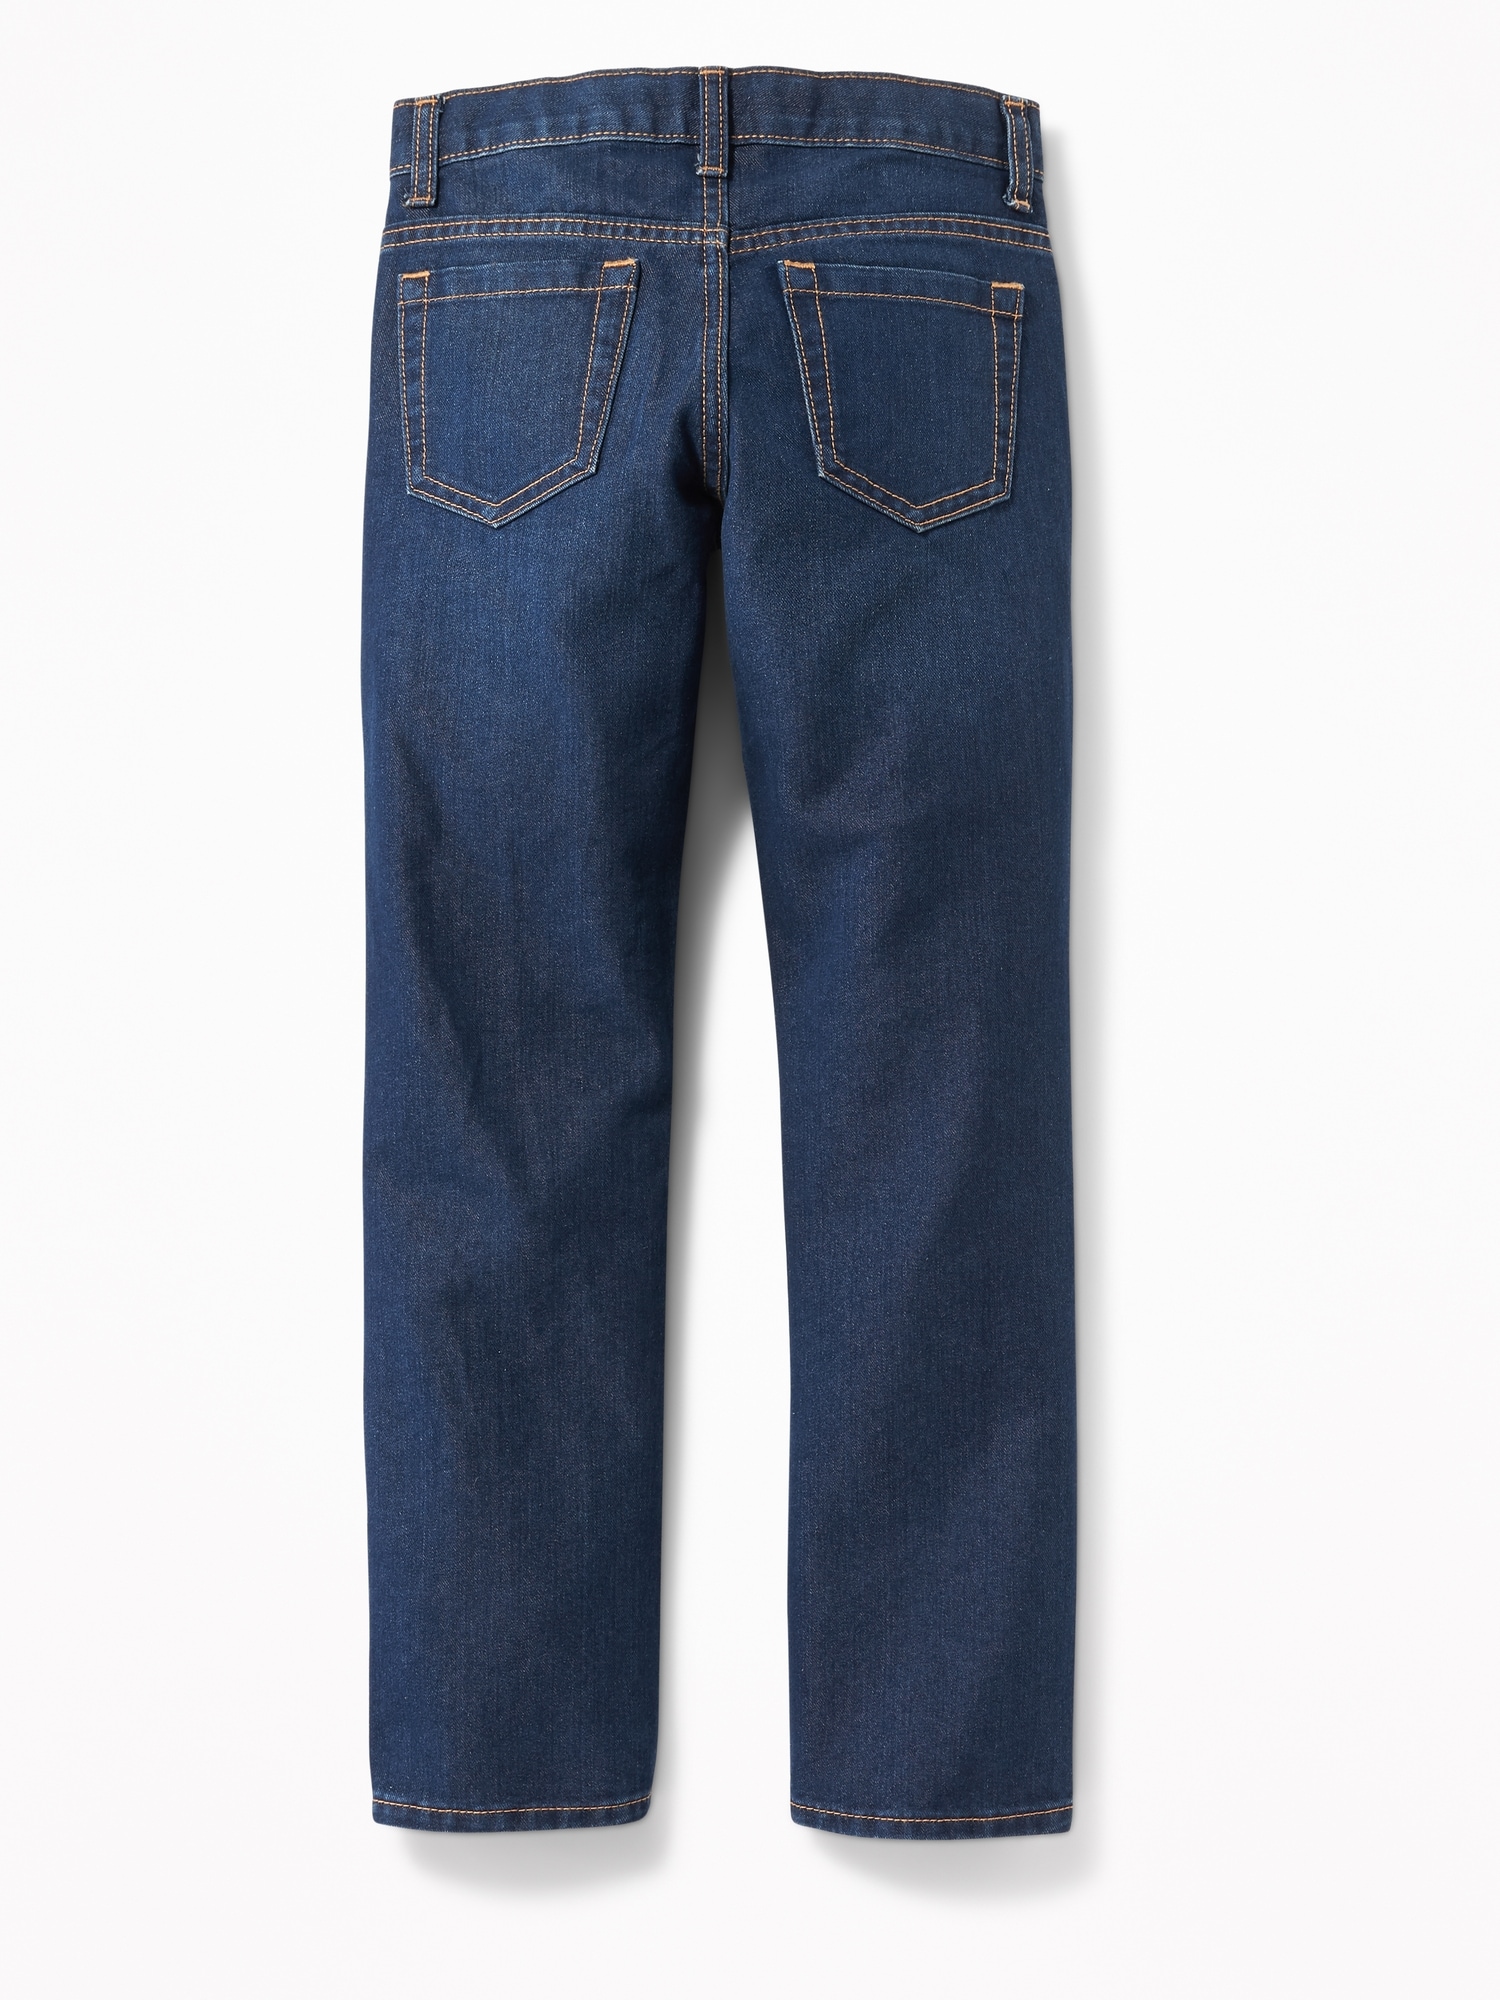 old navy skinny stretch jeans